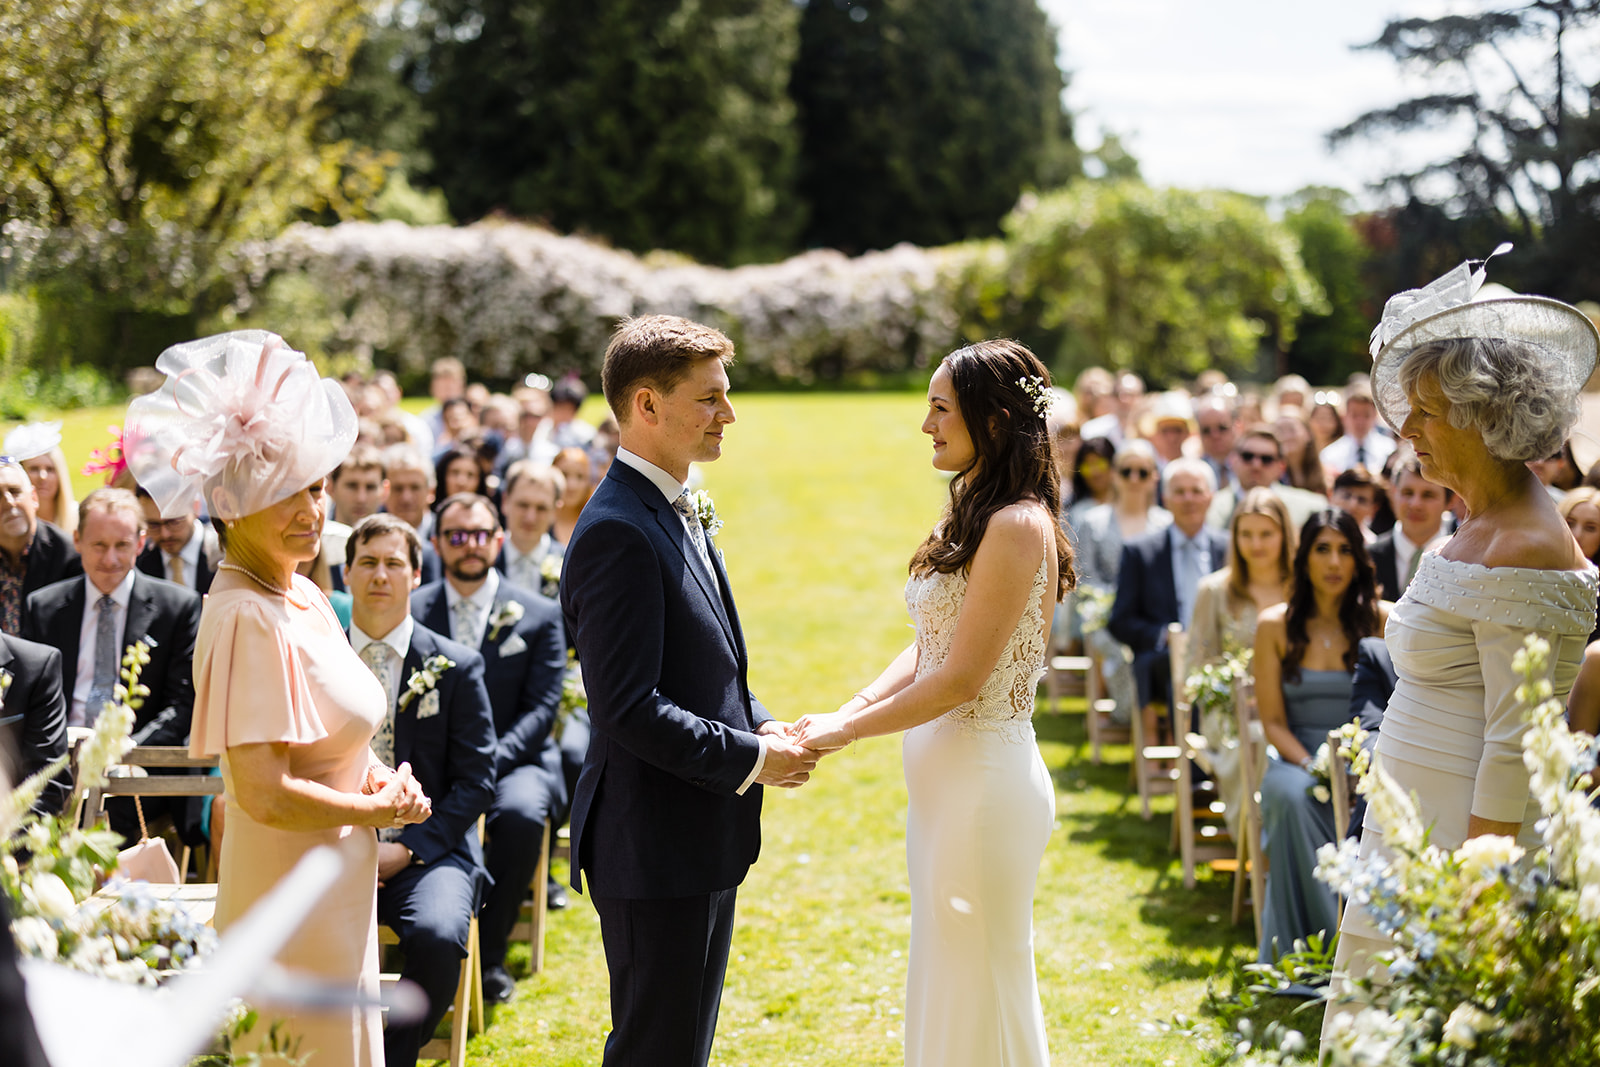 Pennard house outdoor wedding ceremony 